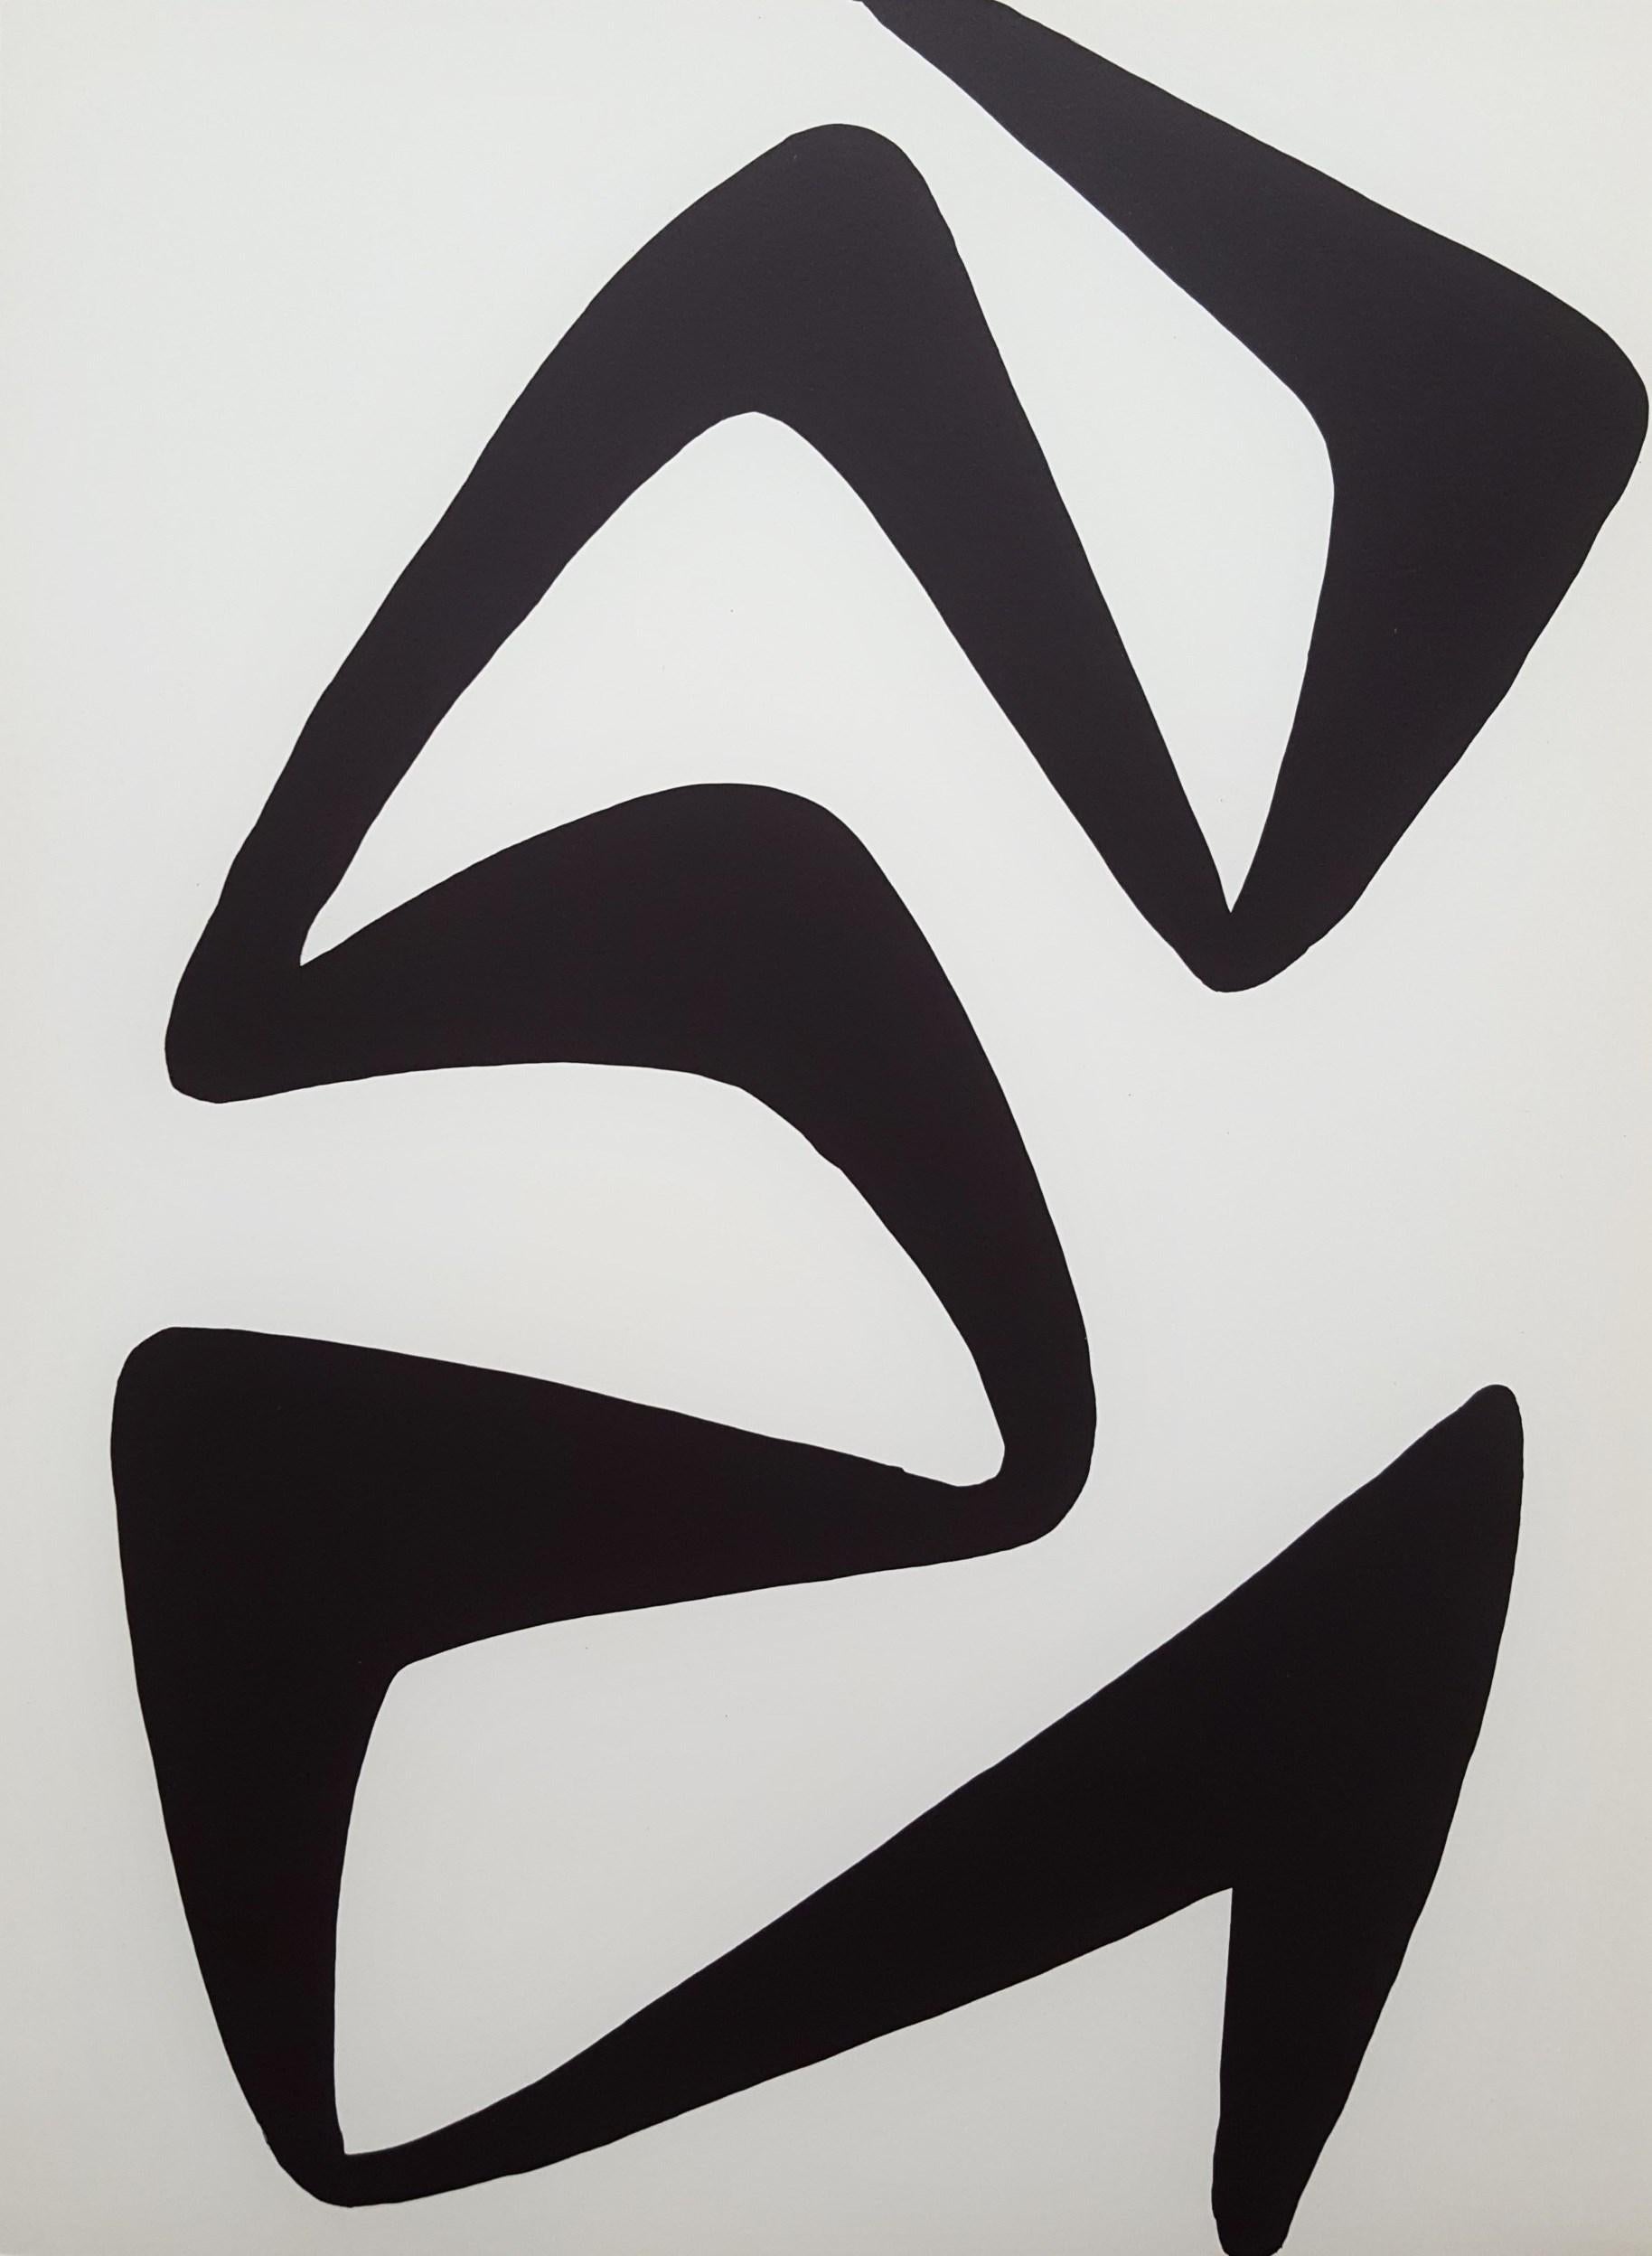 Two Original Lithographs from DLM - Modern Print by Alexander Calder